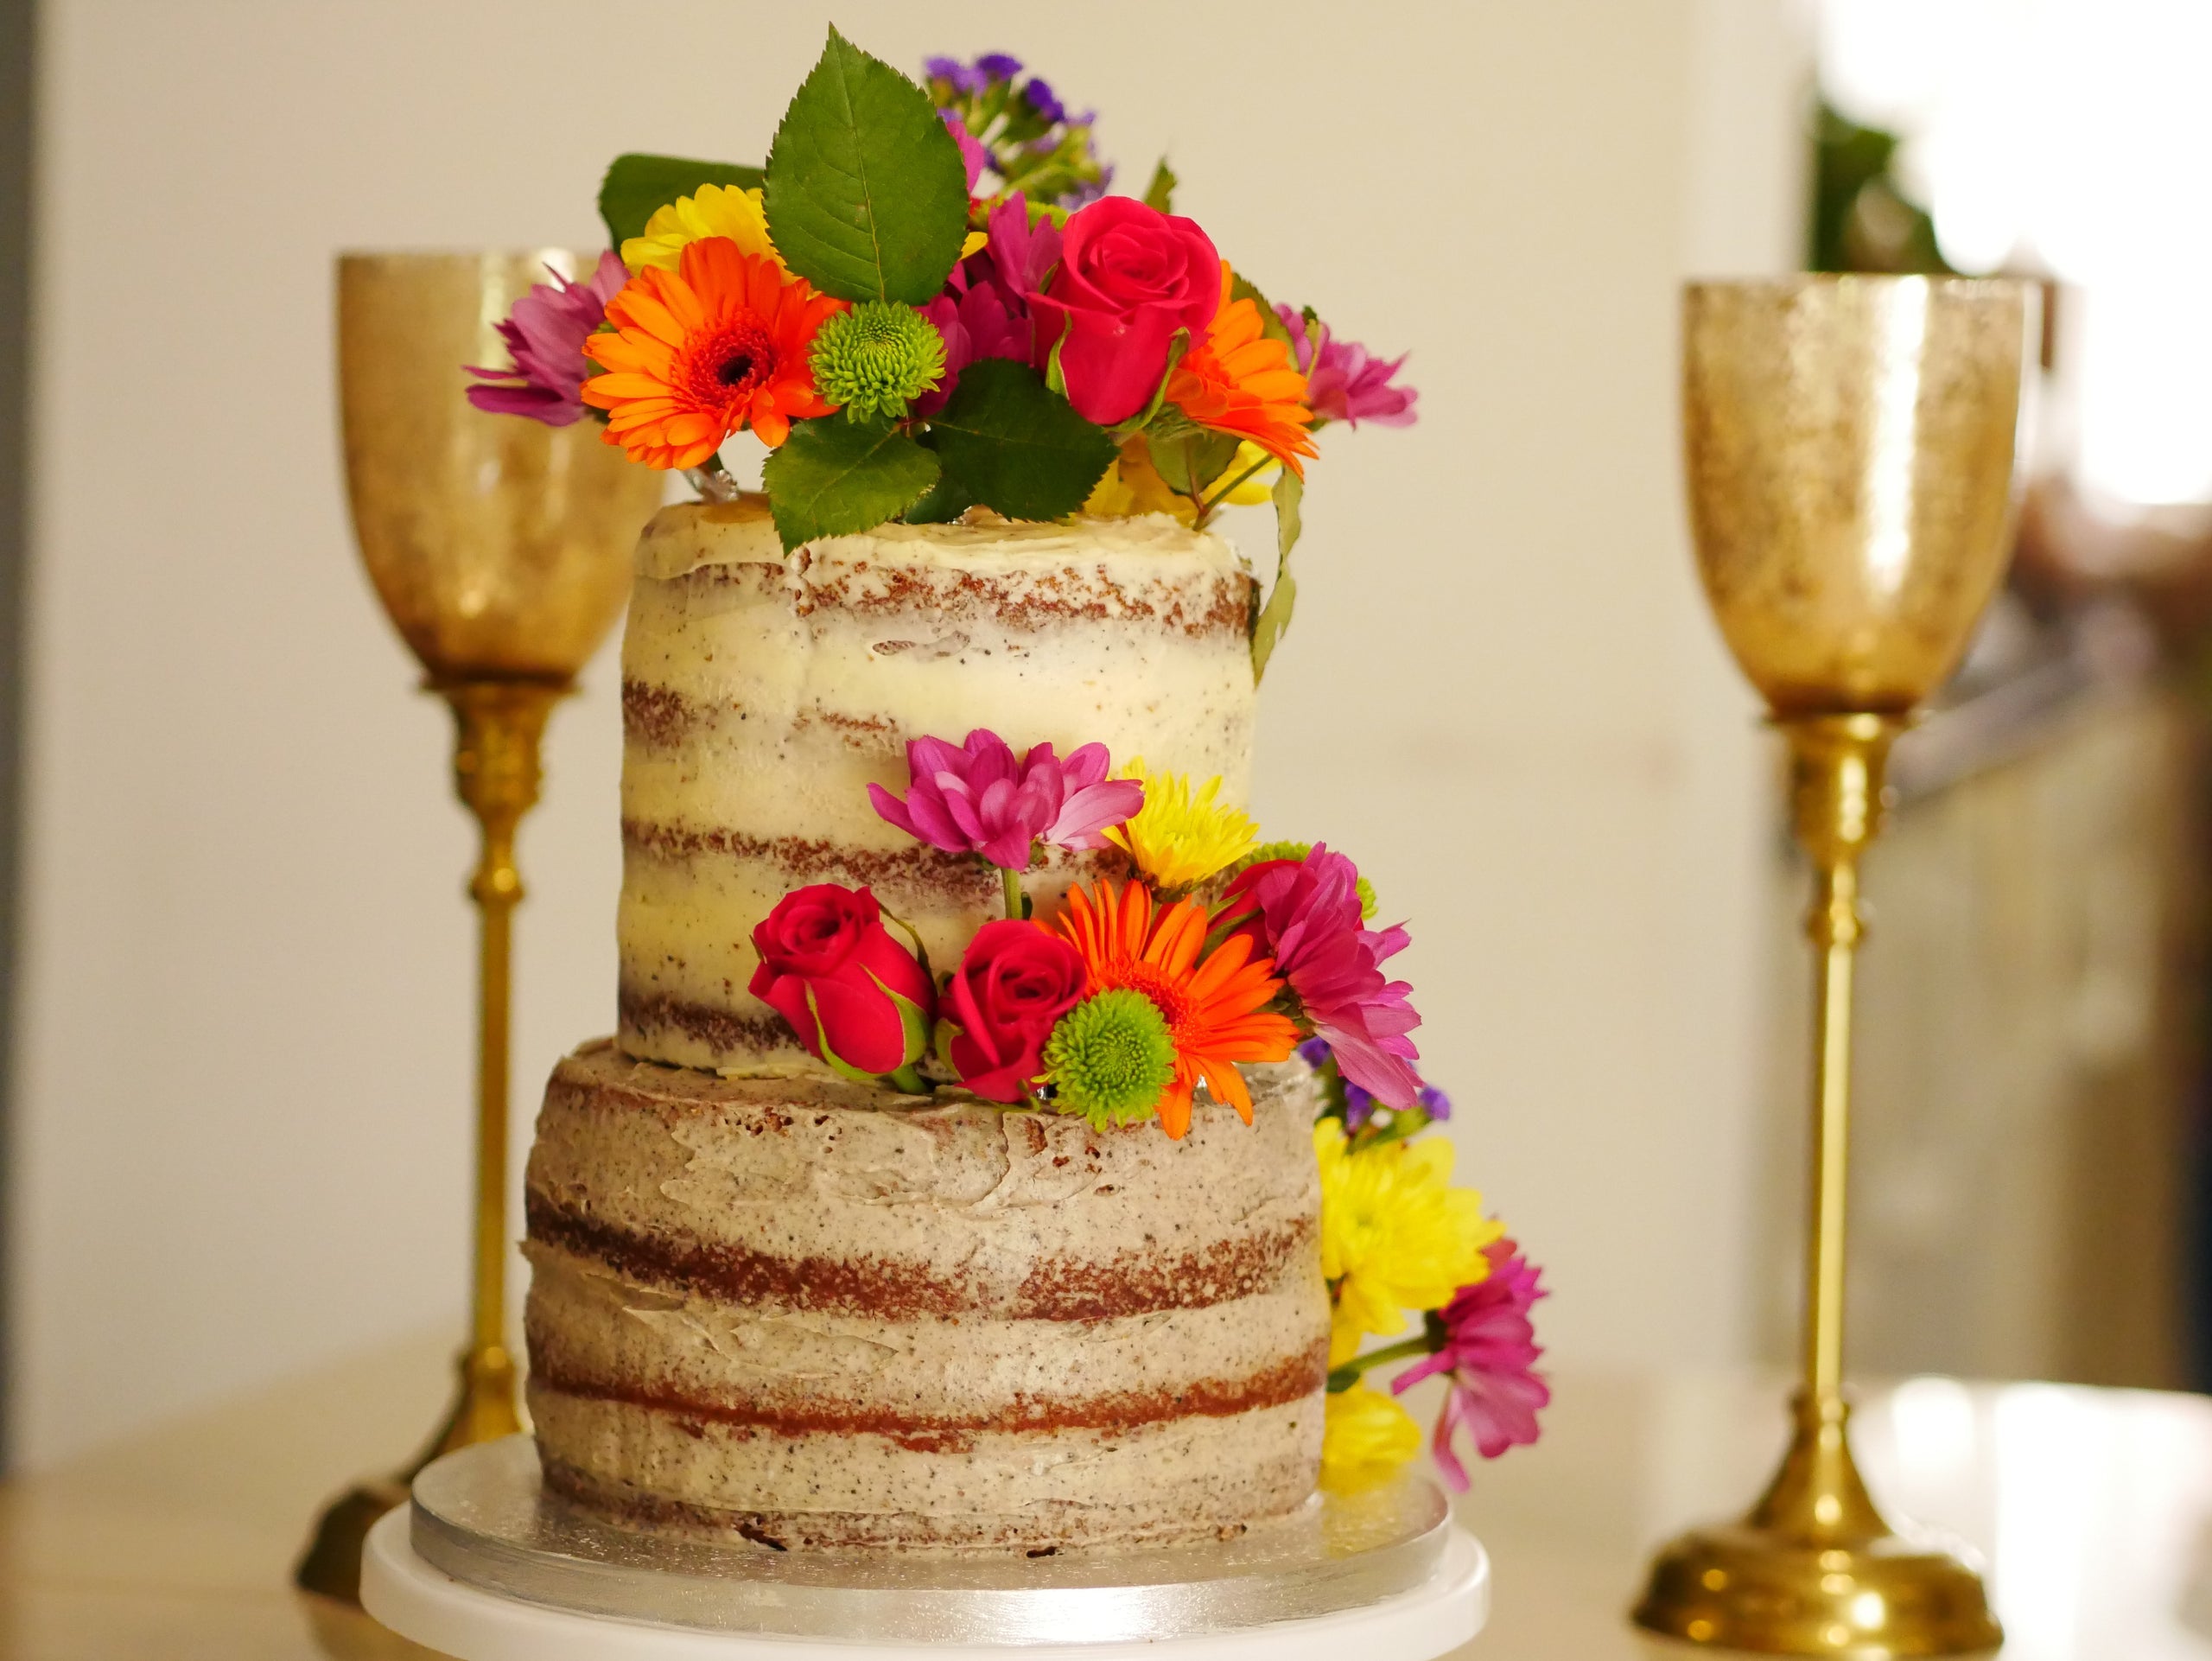 PinkChanelLuis Fresh Cream Cake  Farah's Dessert Heaven – FARAH'S DESSERT  HEAVEN